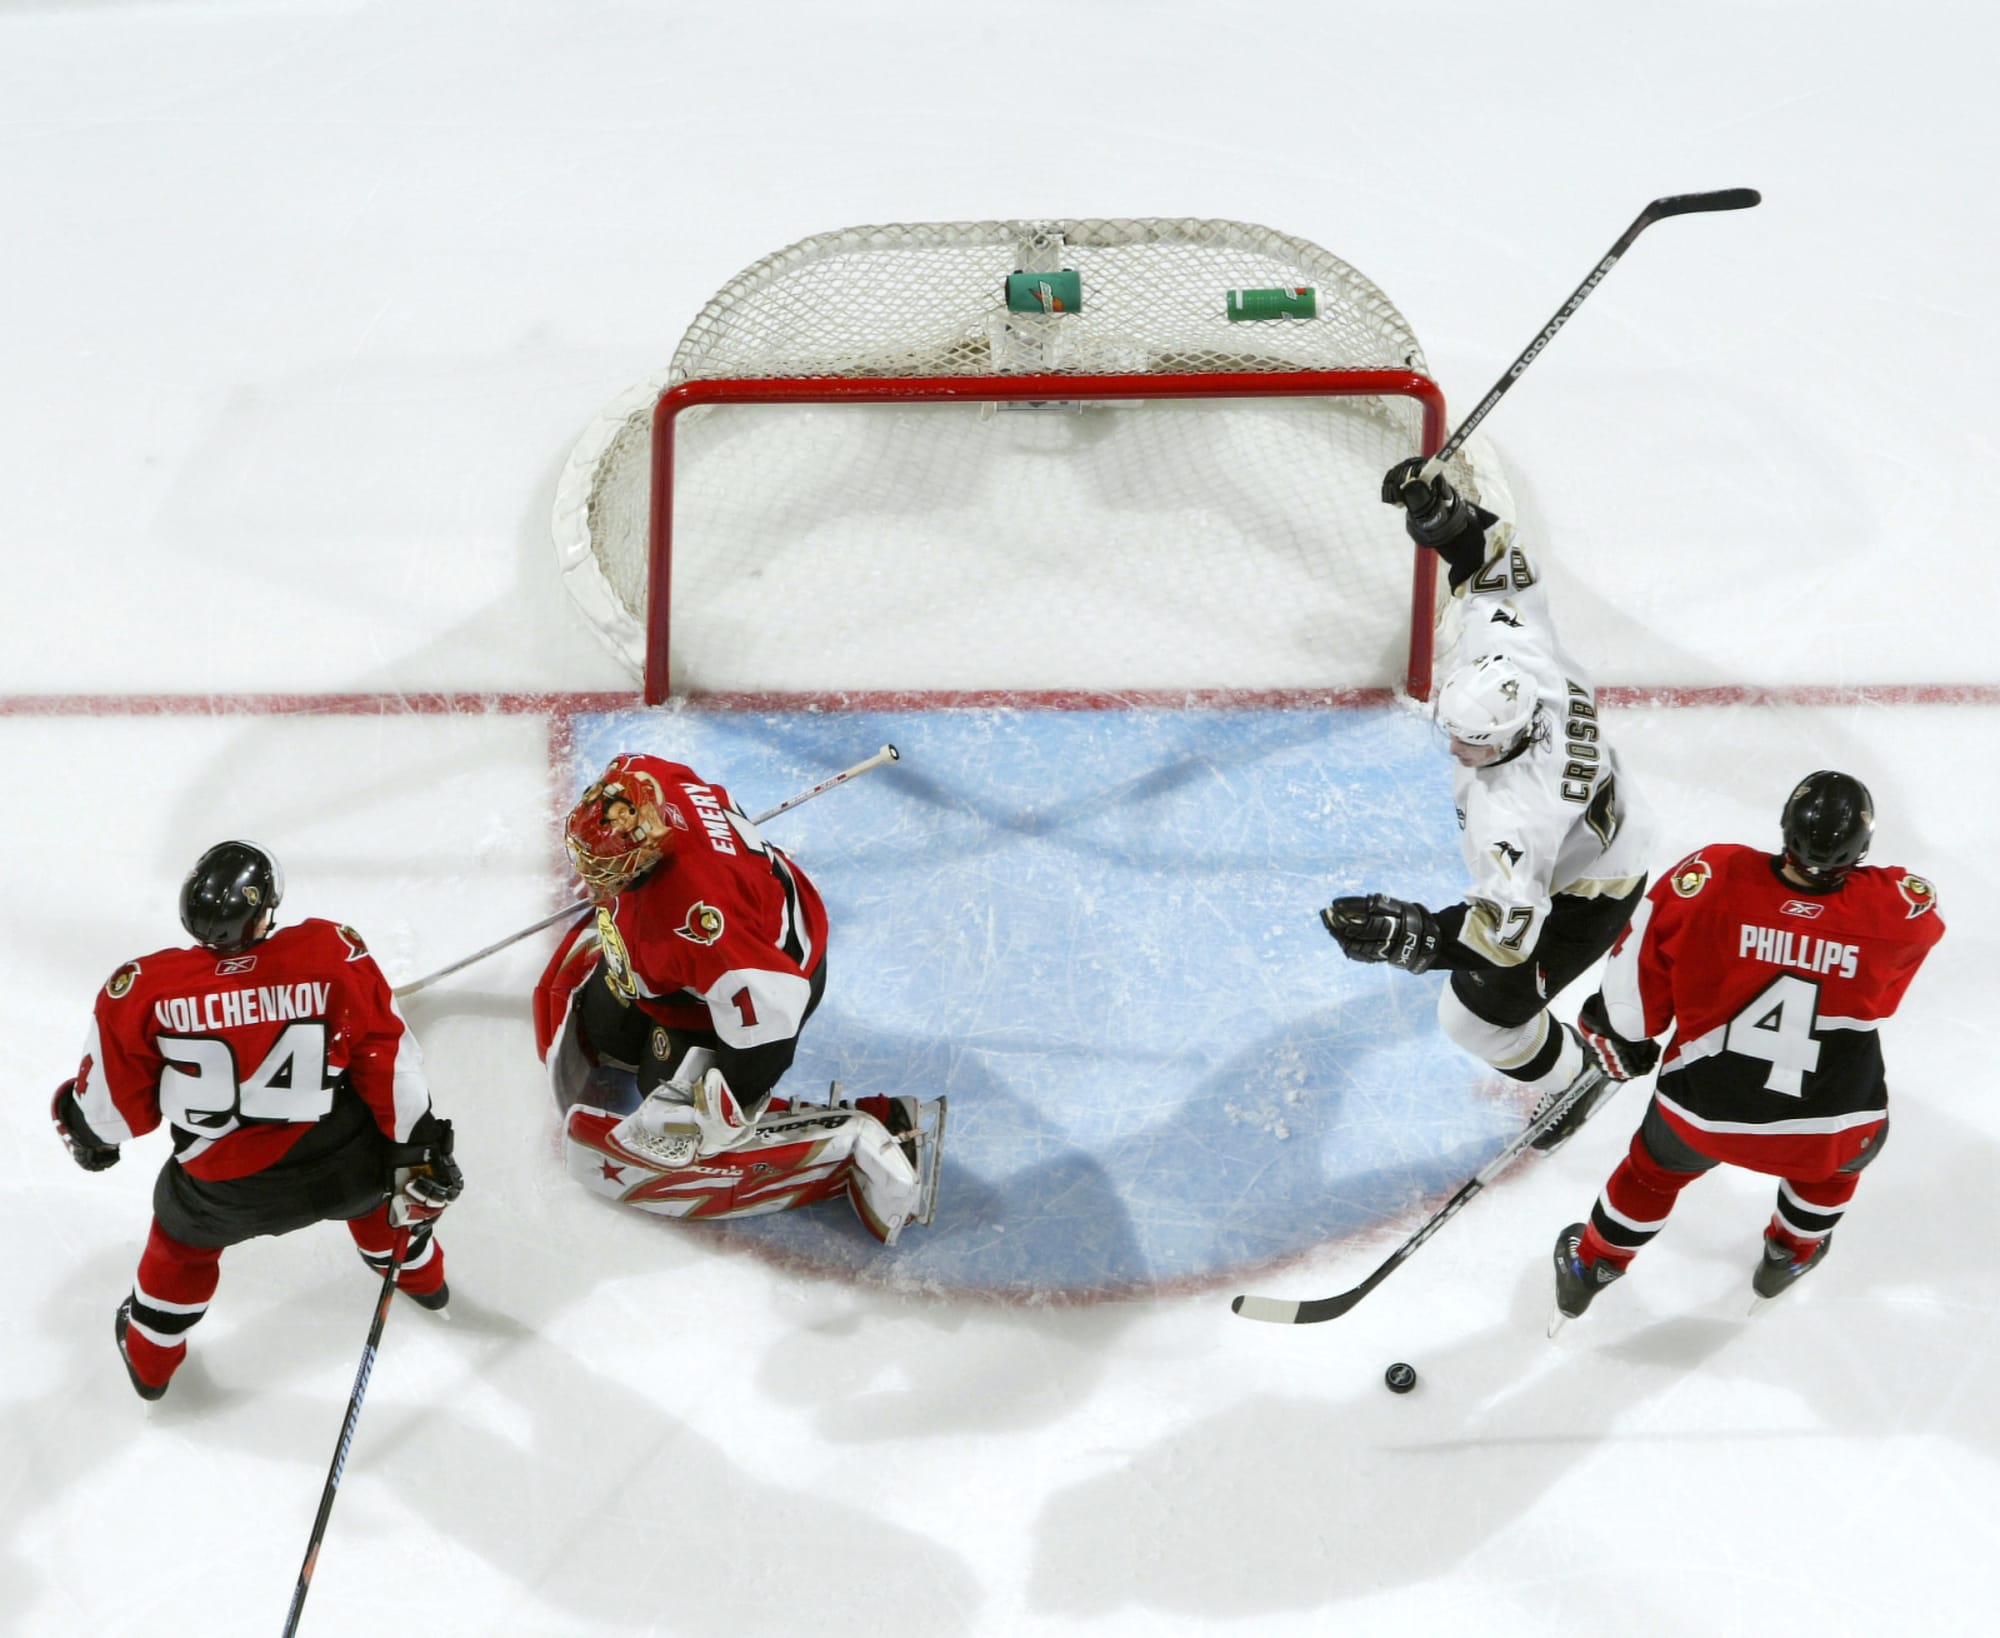 Ottawa Senators fall 4-1 to Penguins